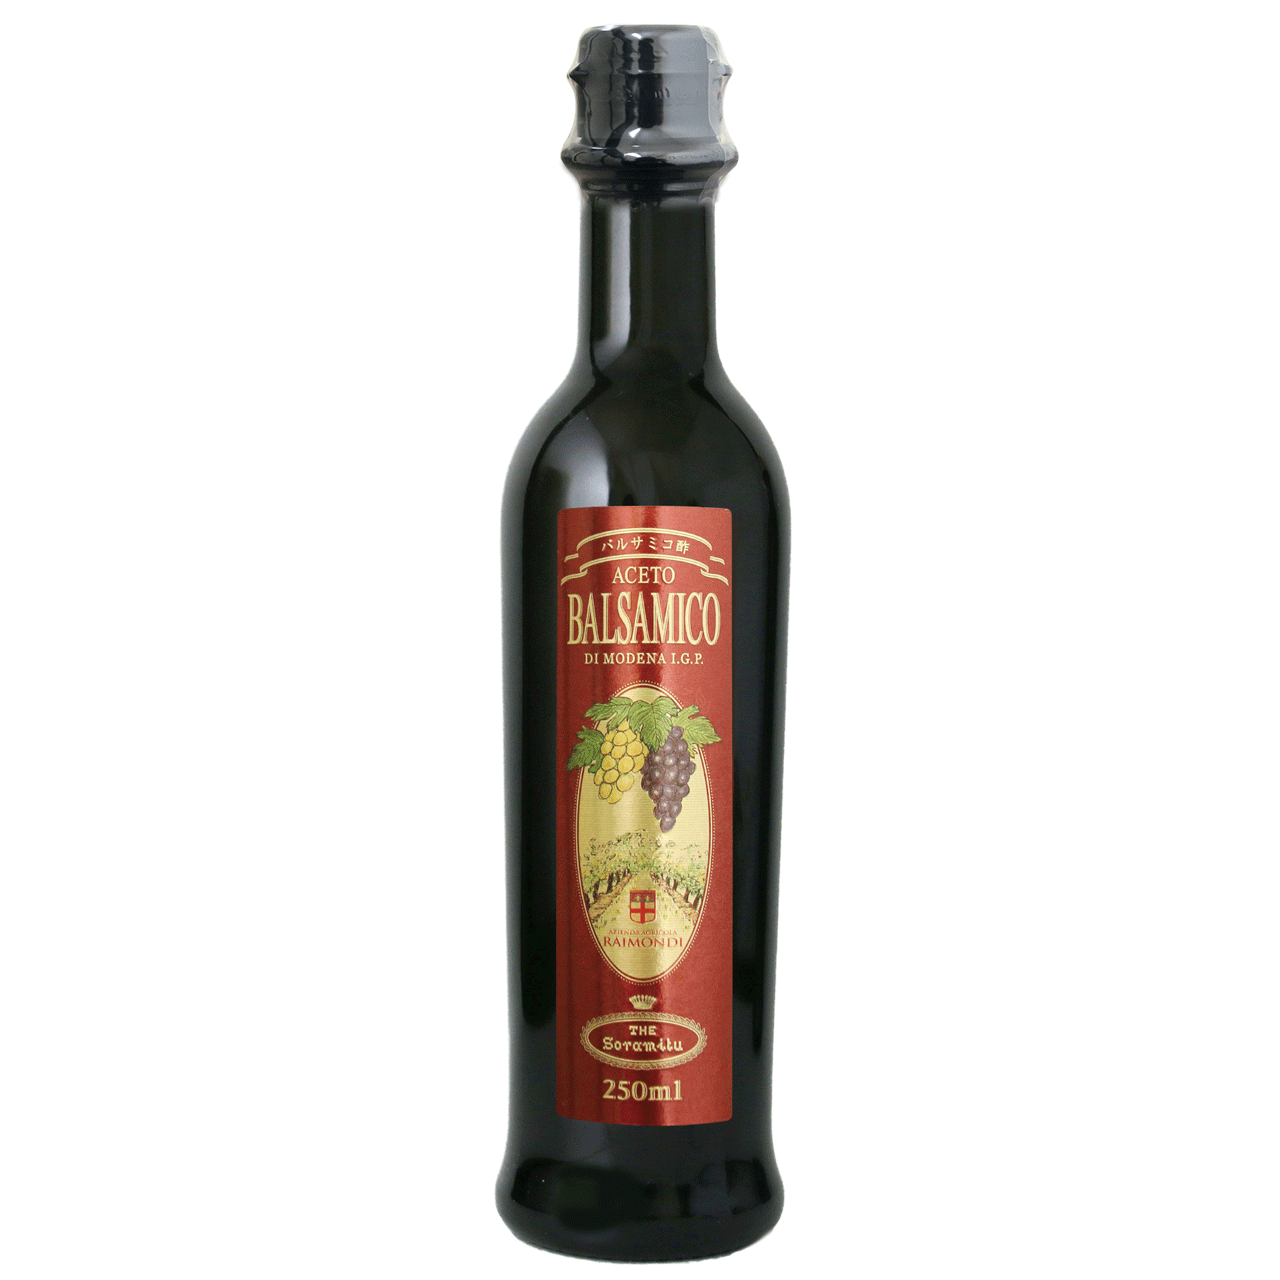 ACETO BALSAMICO DI MODENA I.G.P 250ml - Tasteful and flavorful balsamic vinegar aged in oak barrels